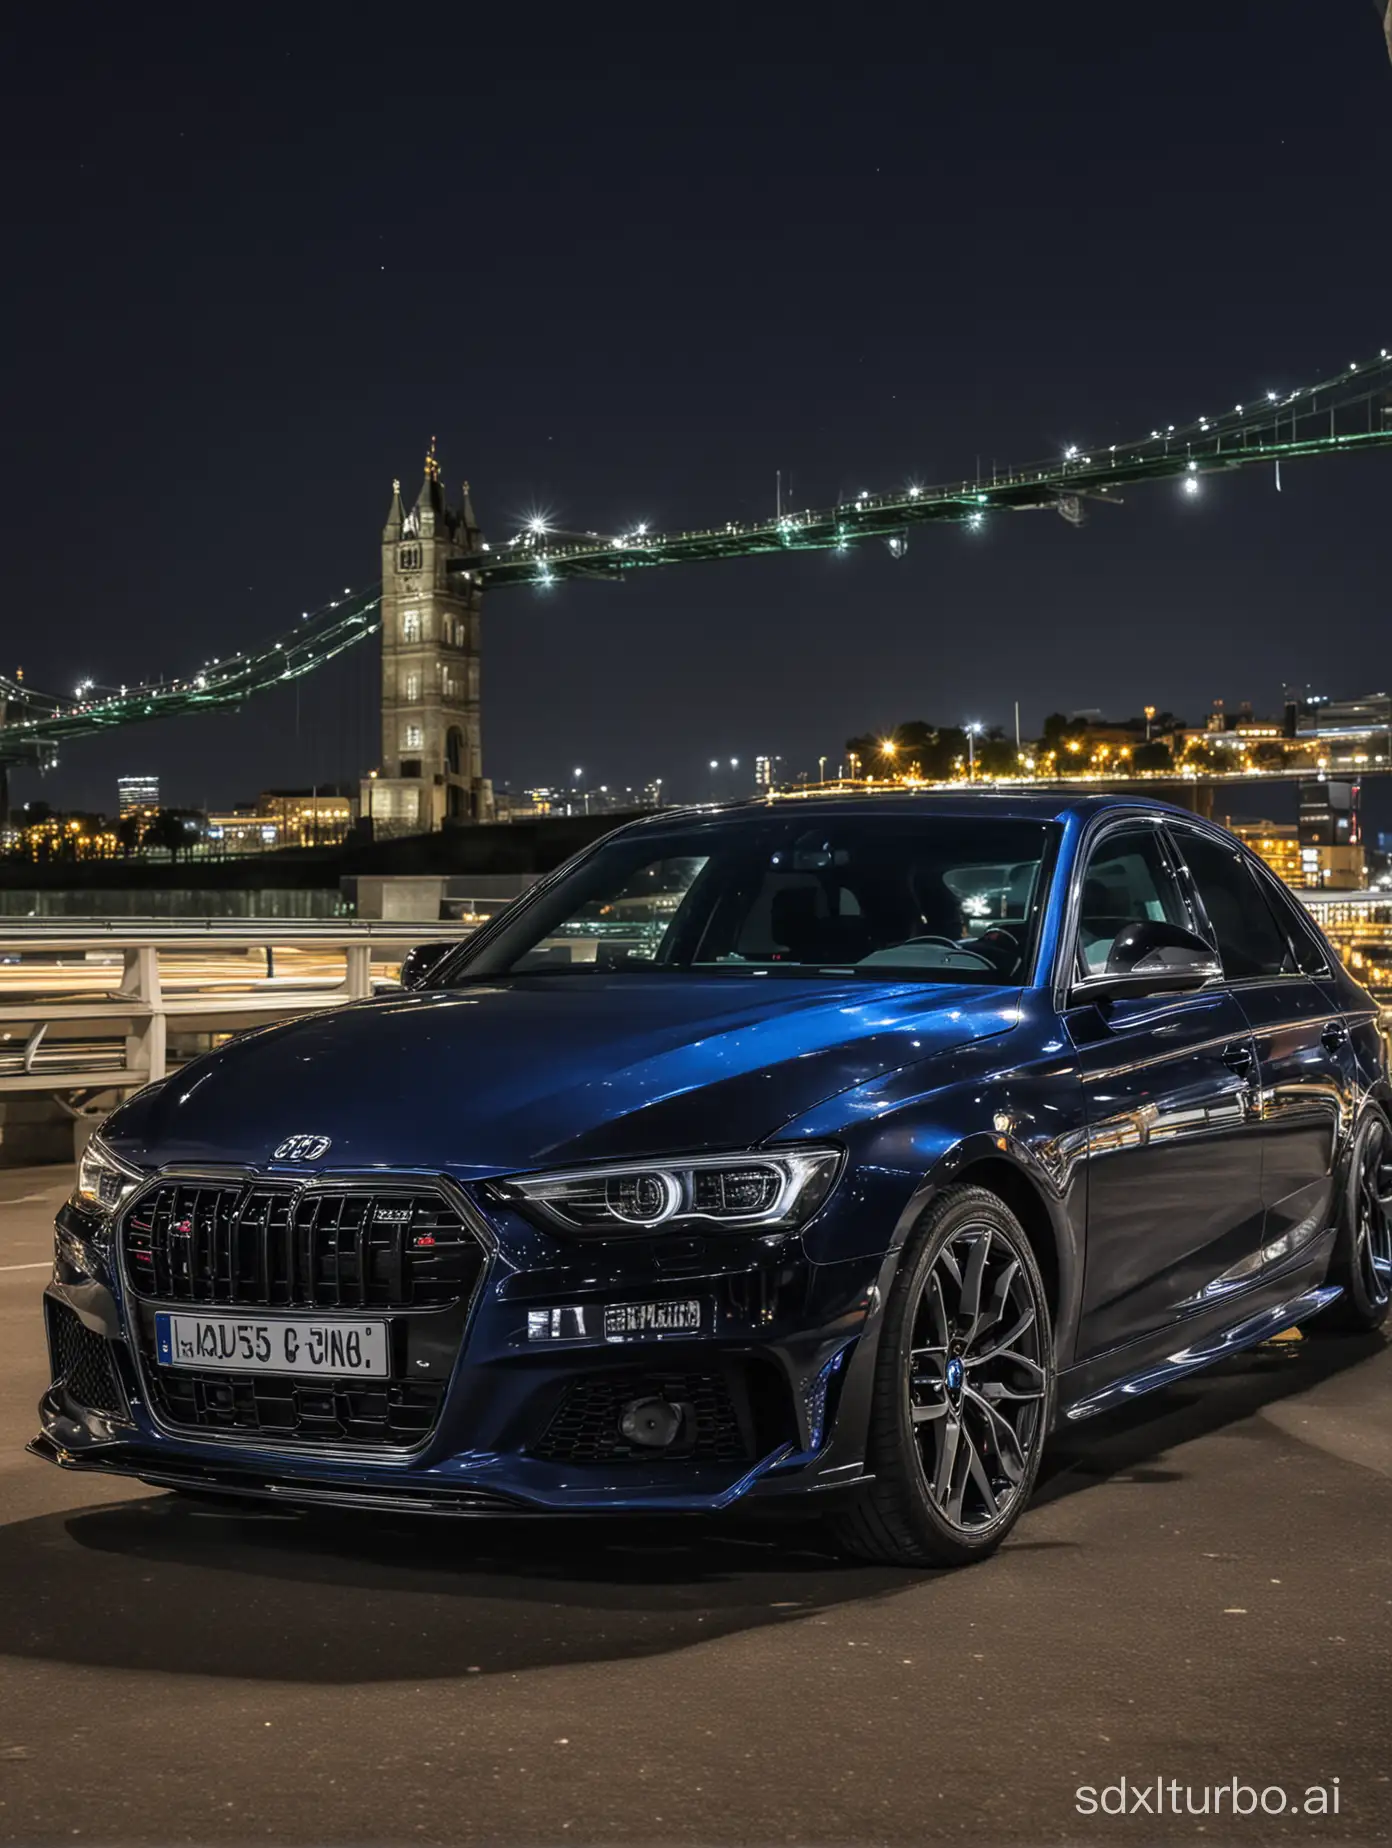 BMW 330D blue night race with Audi A3 black